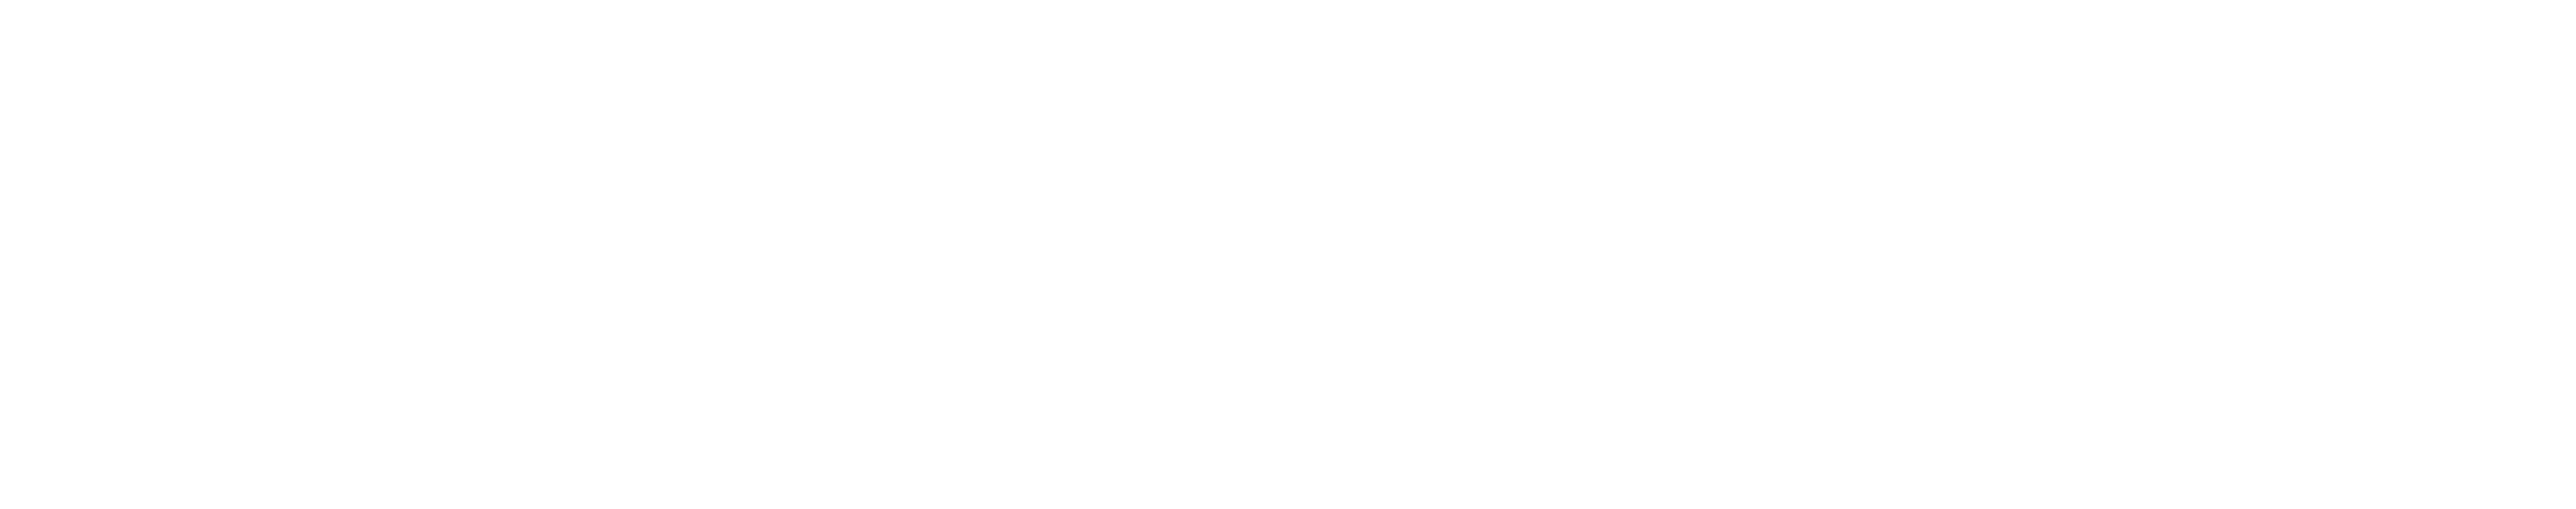 Husky's Network Community